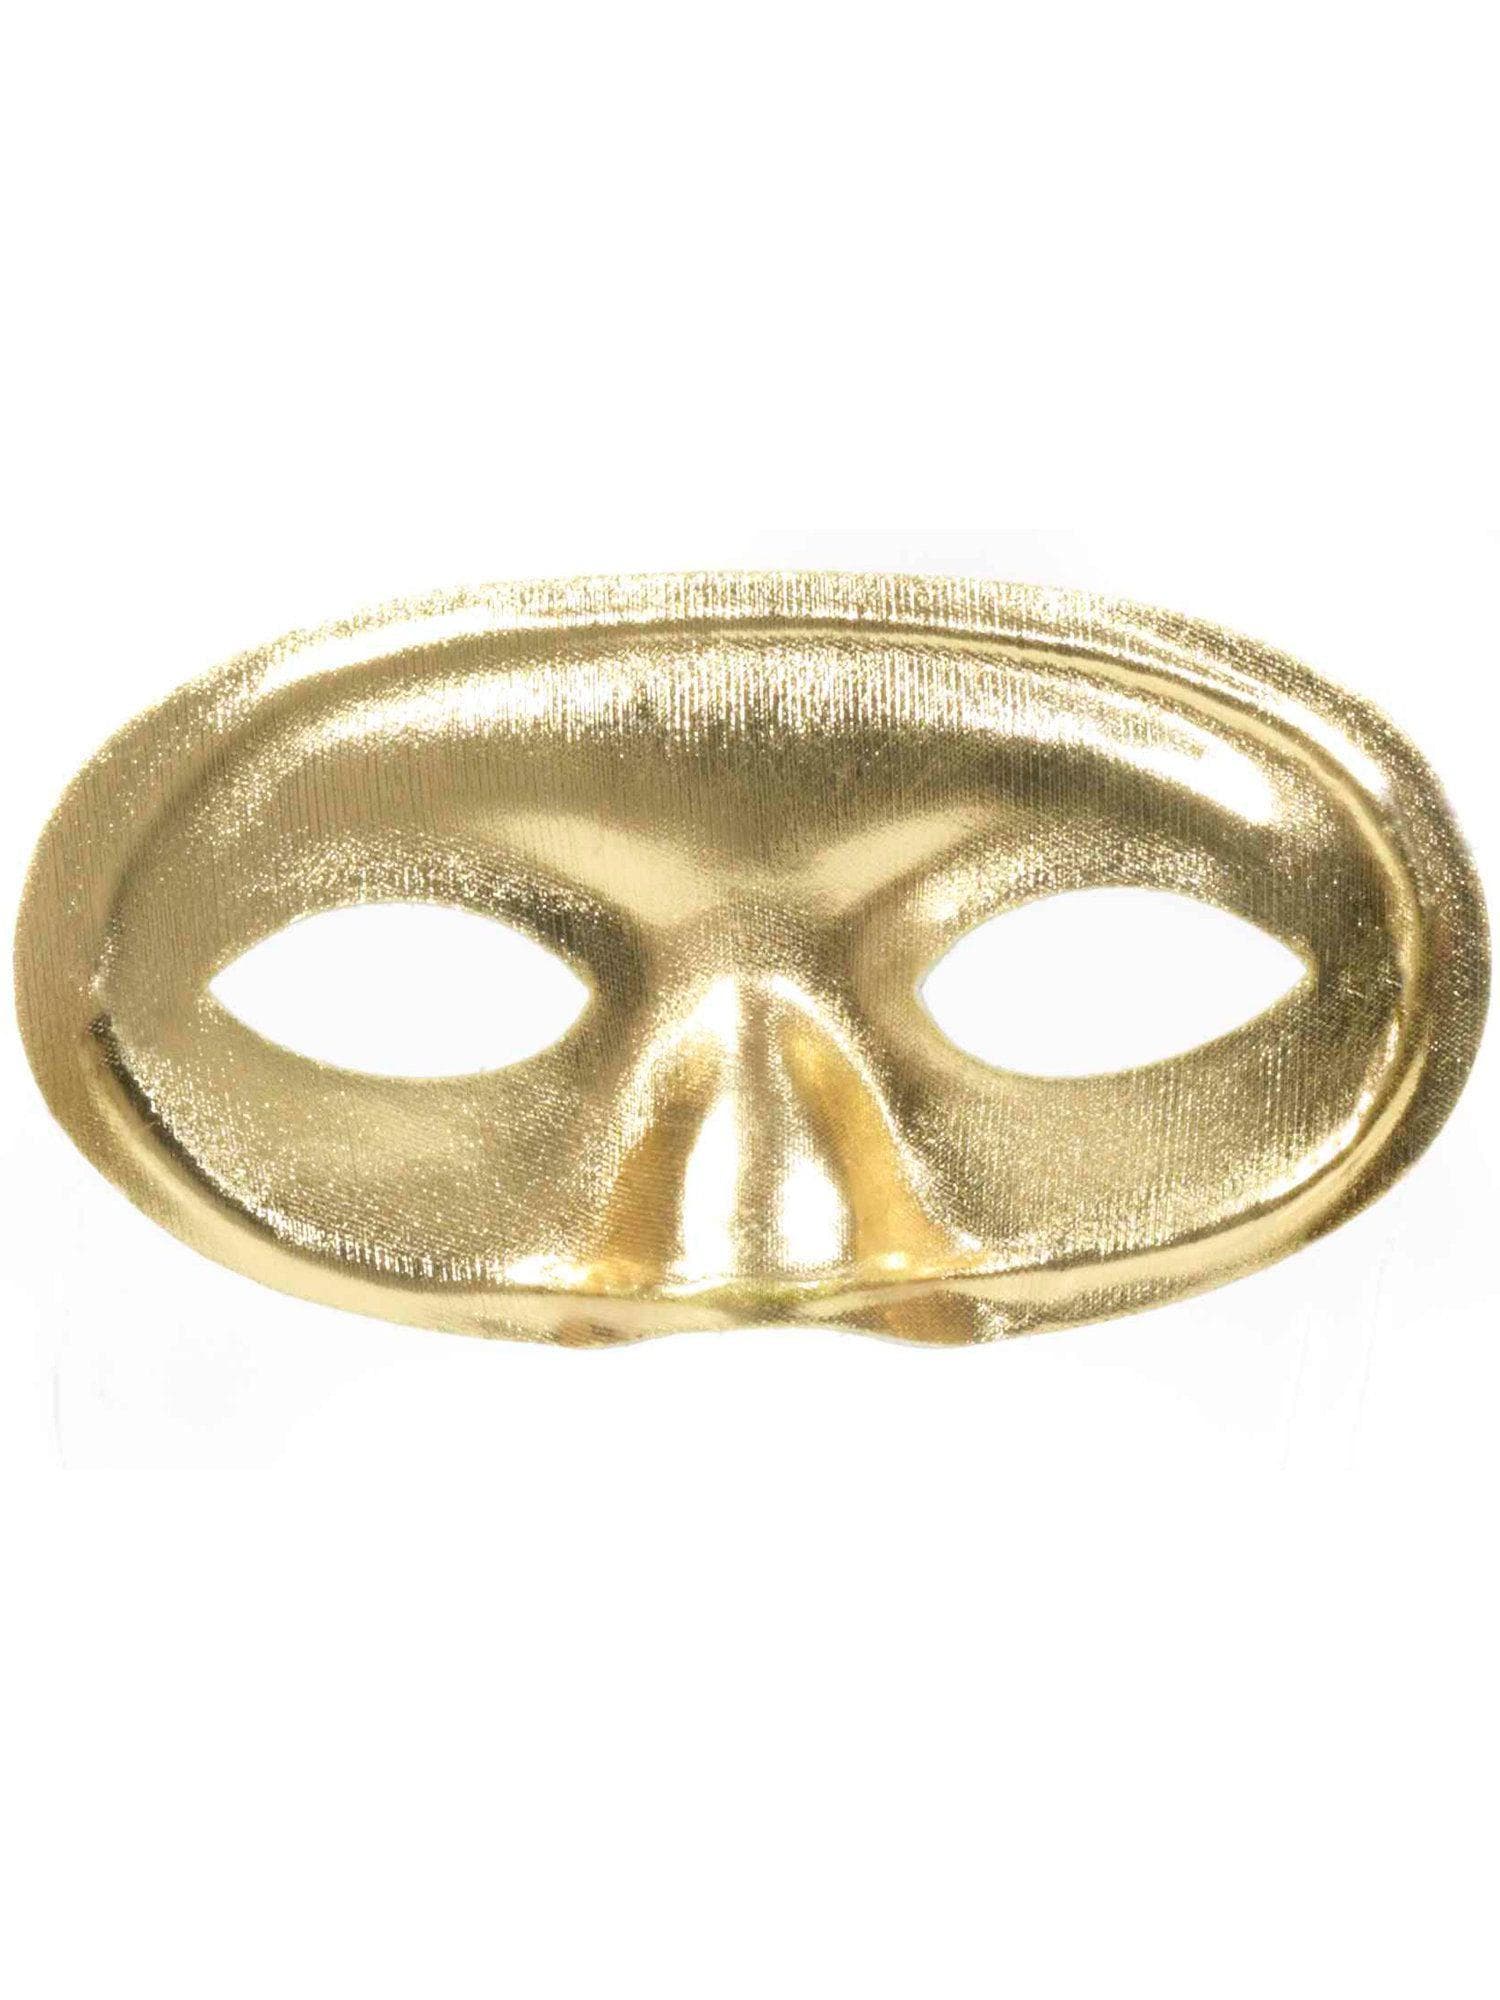 Gold Domino Mask - costumes.com